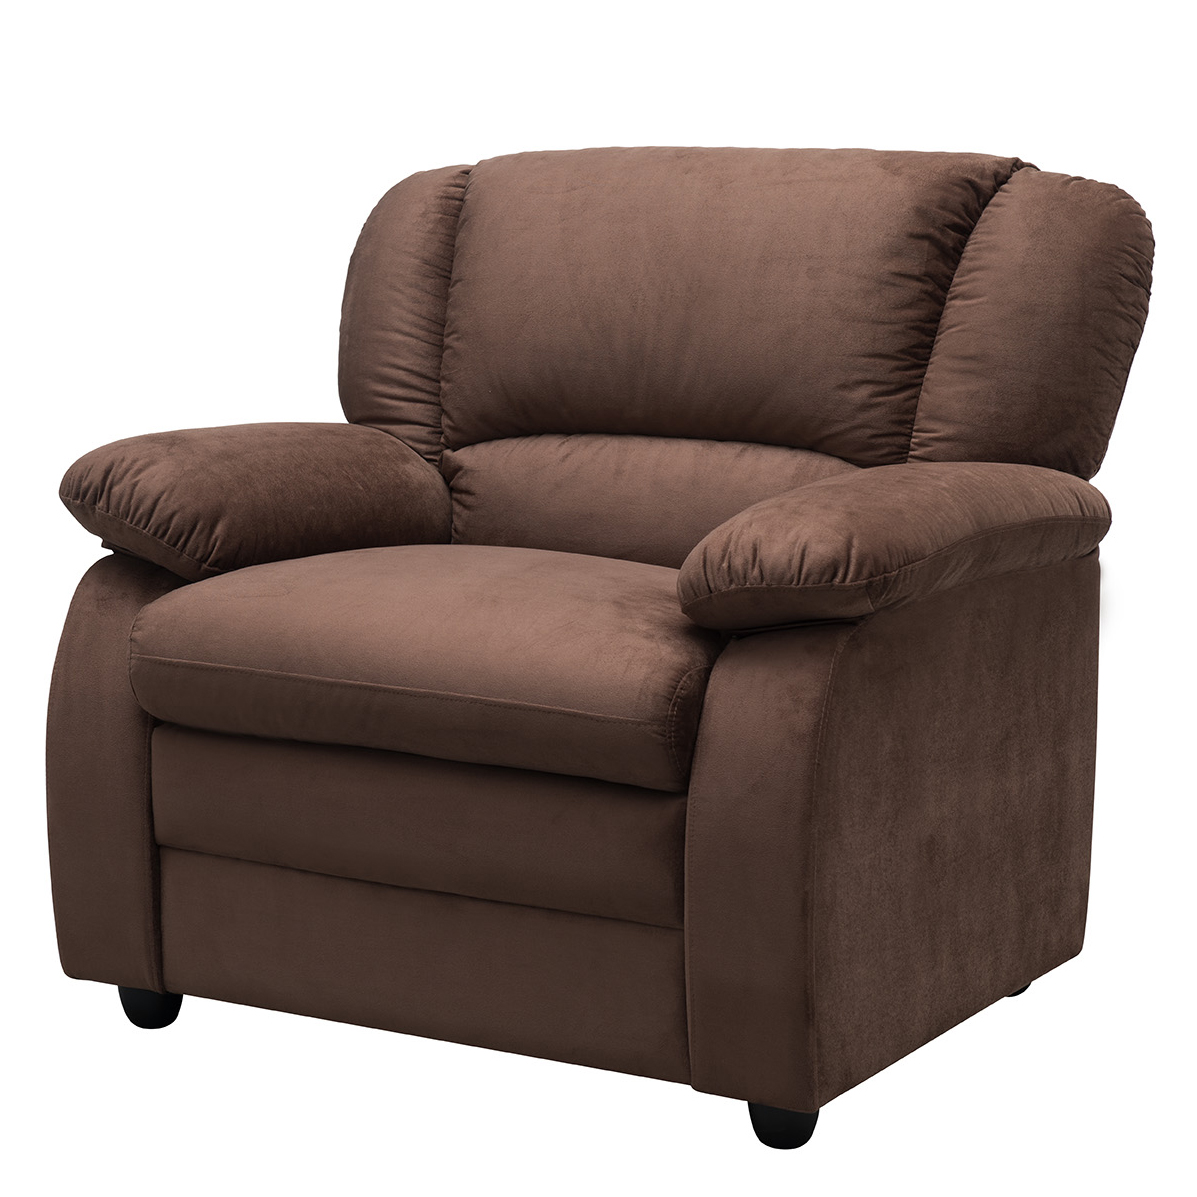 Abanda Fabric Chair (Chocolate)